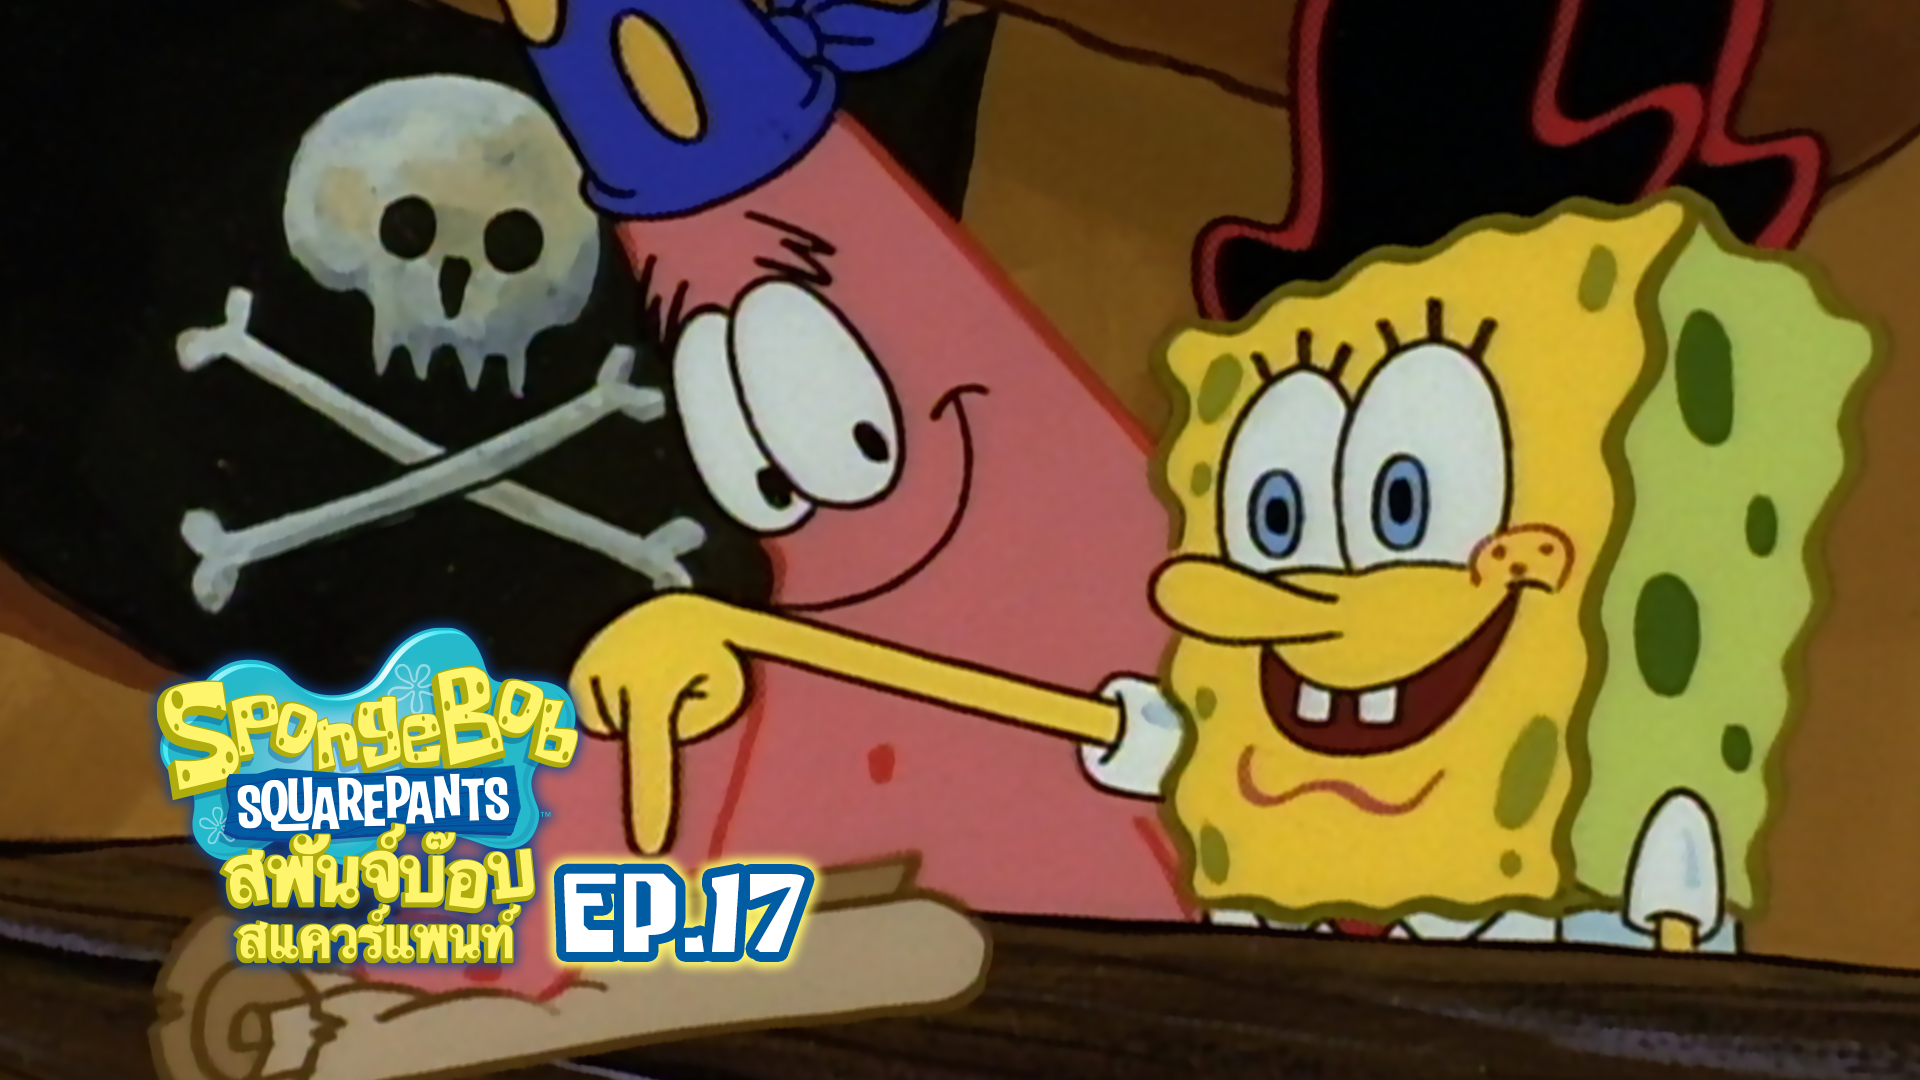 SpongeBob SquarePants  S01E05  Ripped Pants  video Dailymotion